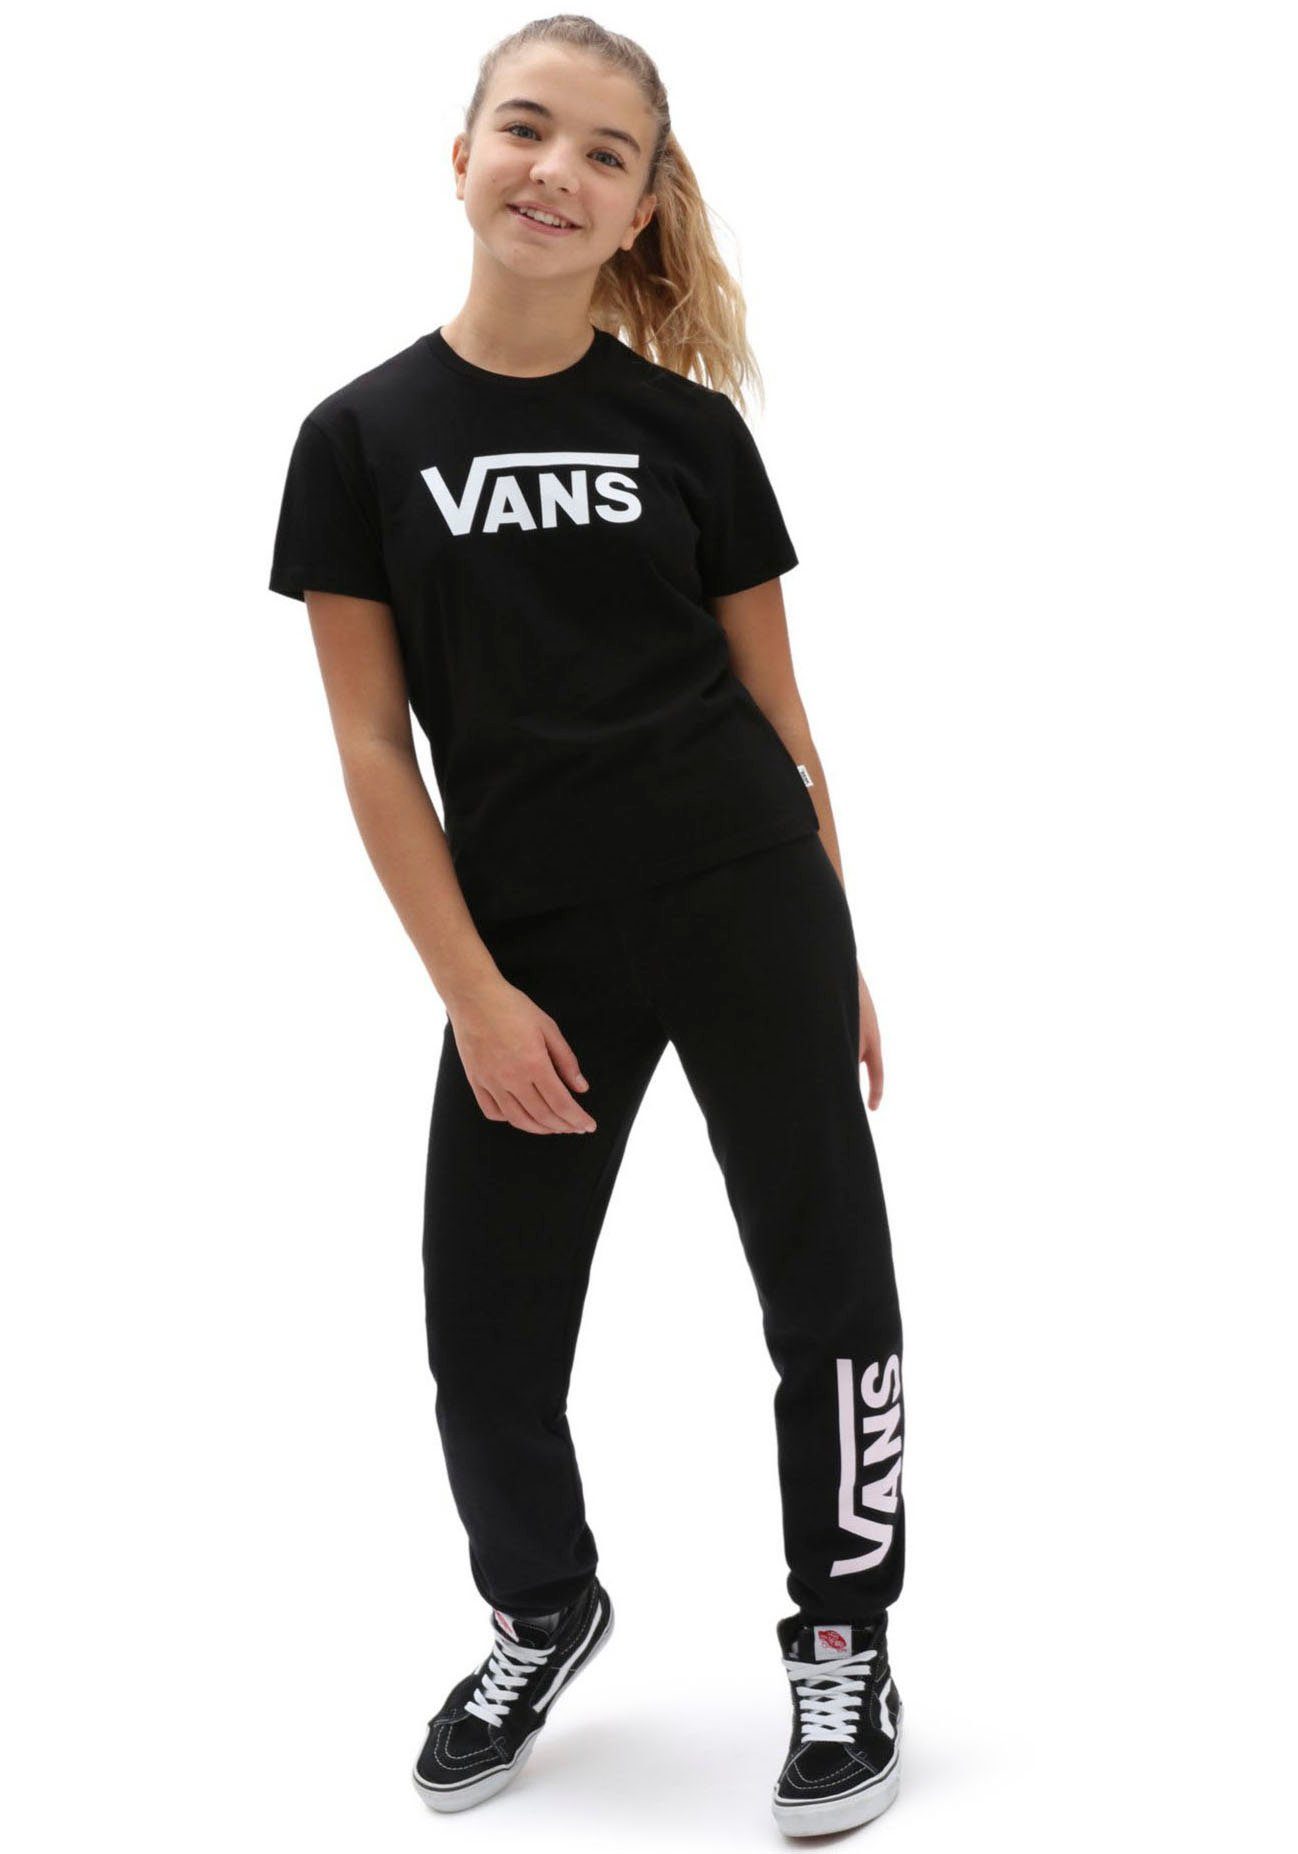 Vans T-Shirt GIRLS" schwarz-weiß FLYING CREW V